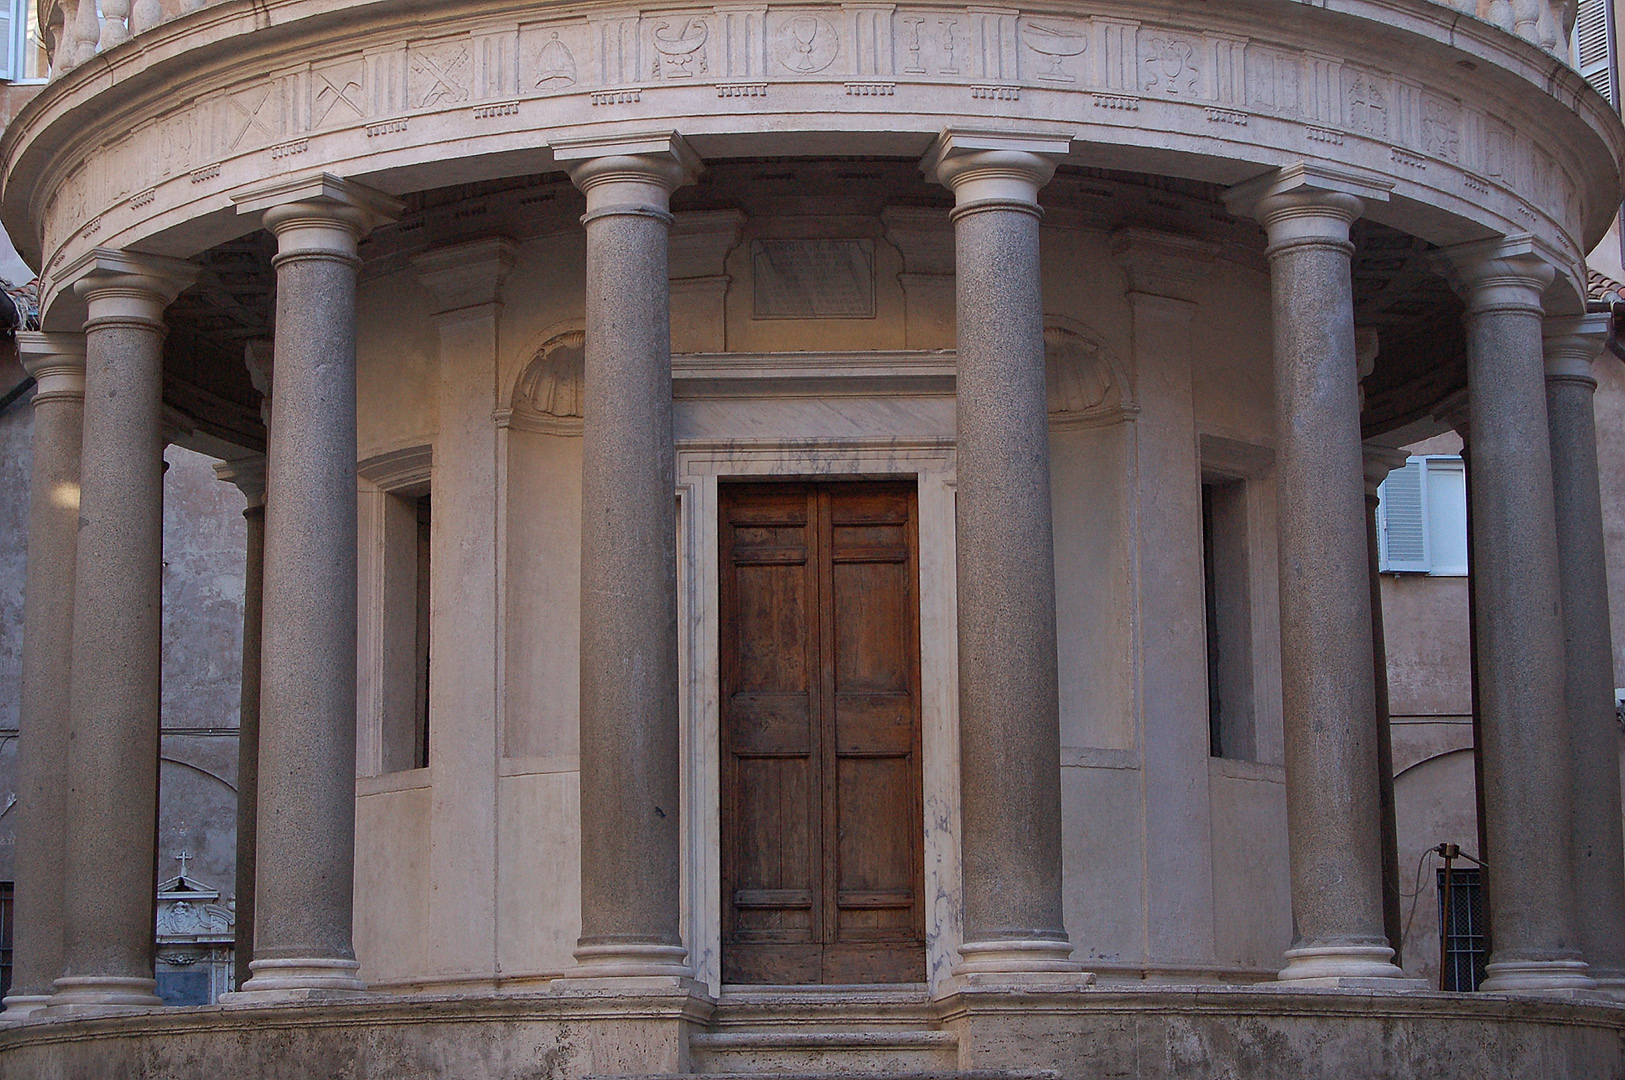 Tempeltje van Bramante; Tempietto (San Pietro in Montorio, Rome, Italy)